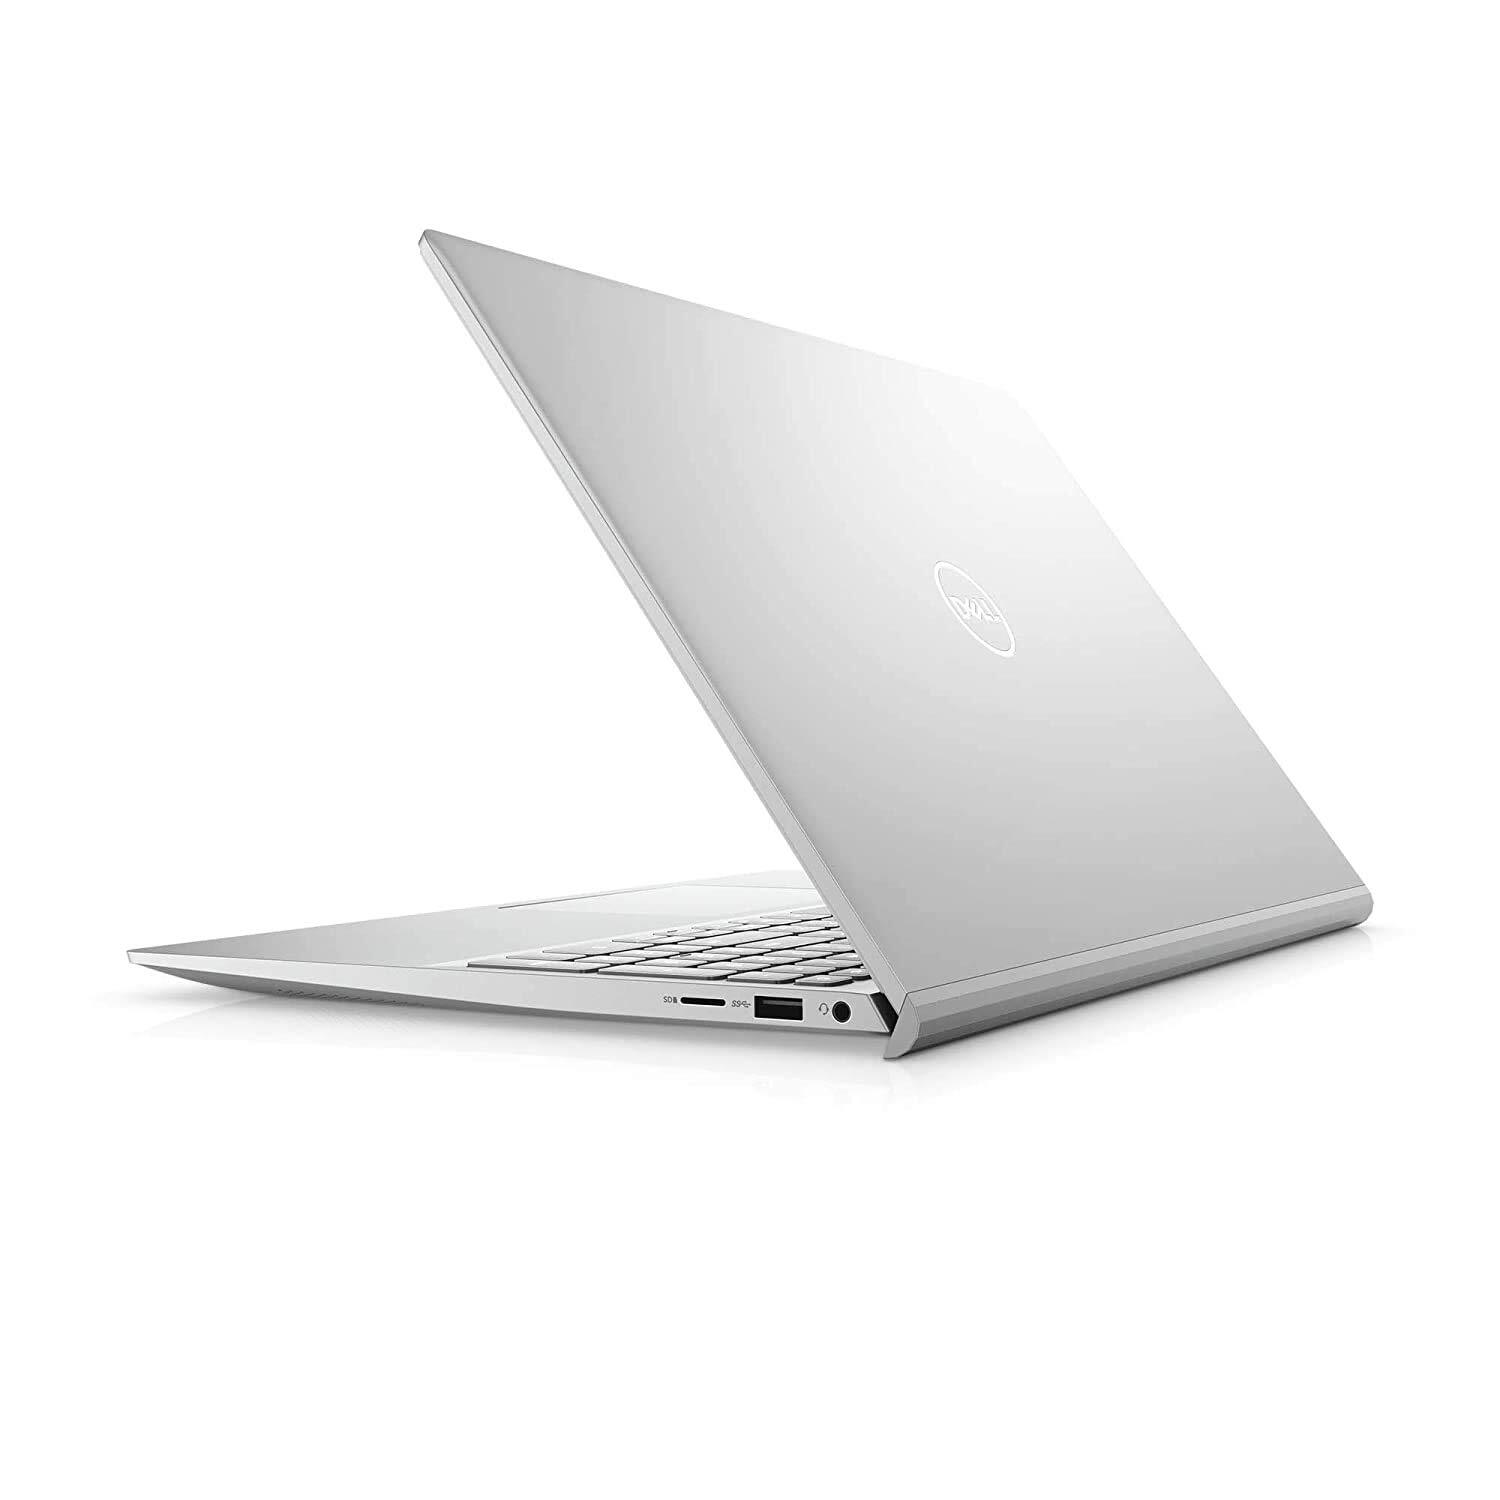 Dell Inspiron 5502 15.6-inch FHD Laptop (11thGen Core i5-1135G7/8GB RAM/512GB SSD/2GB MX330 Graphics/Windows 10 + MS Office Laptop),Platinum Silver-M000000000513 www.mysocially.com